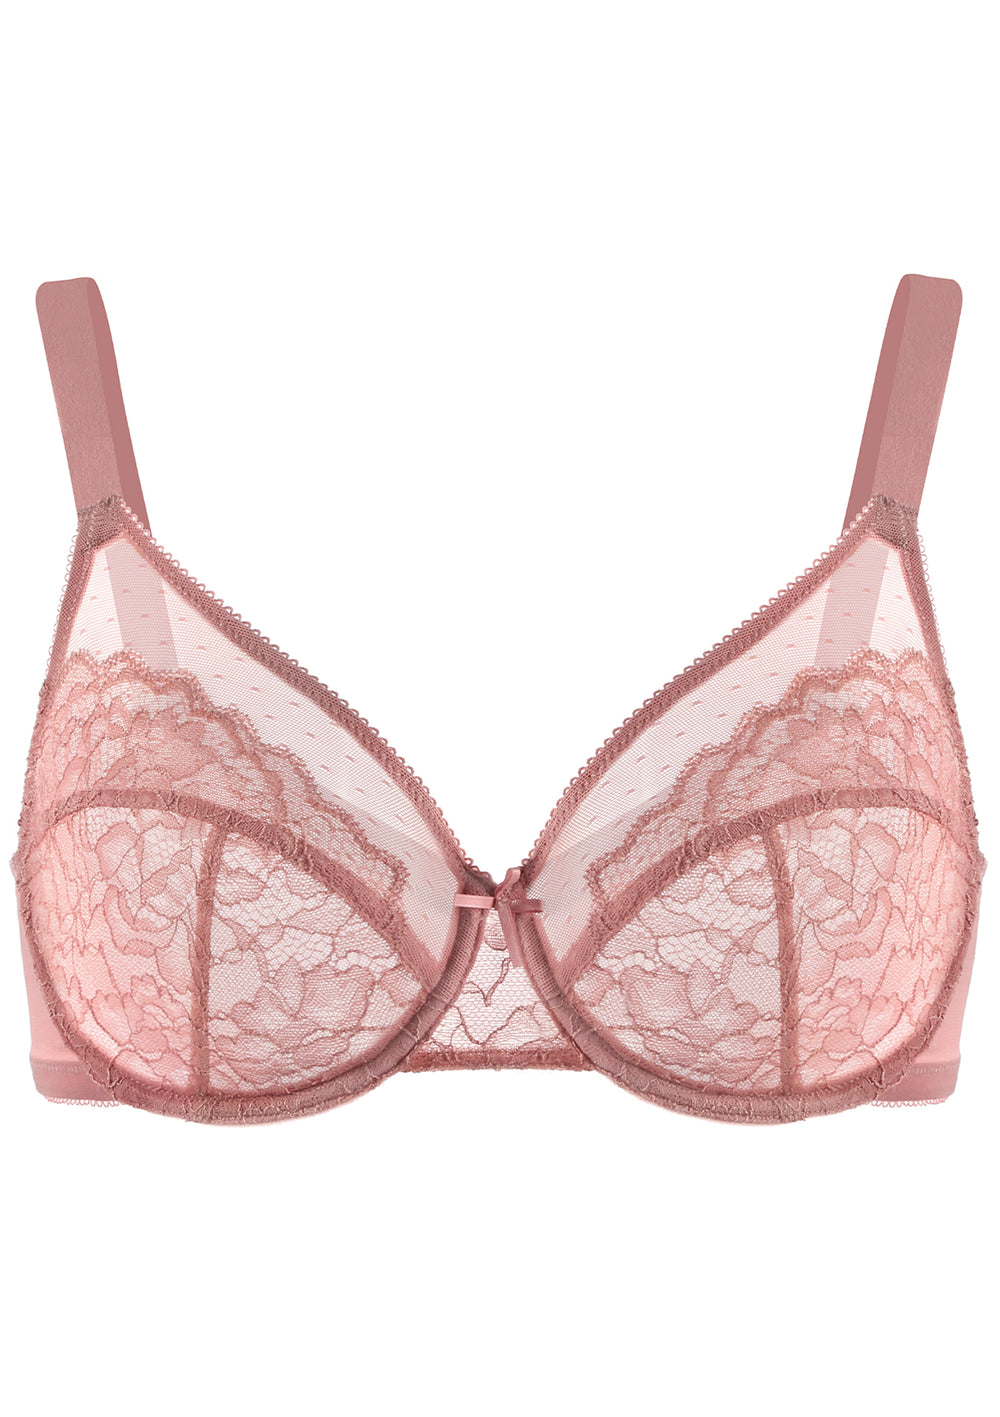 Entyinea Minimizer Bras for Women Double Support Wirefree Bra Hot Pink 3XL  